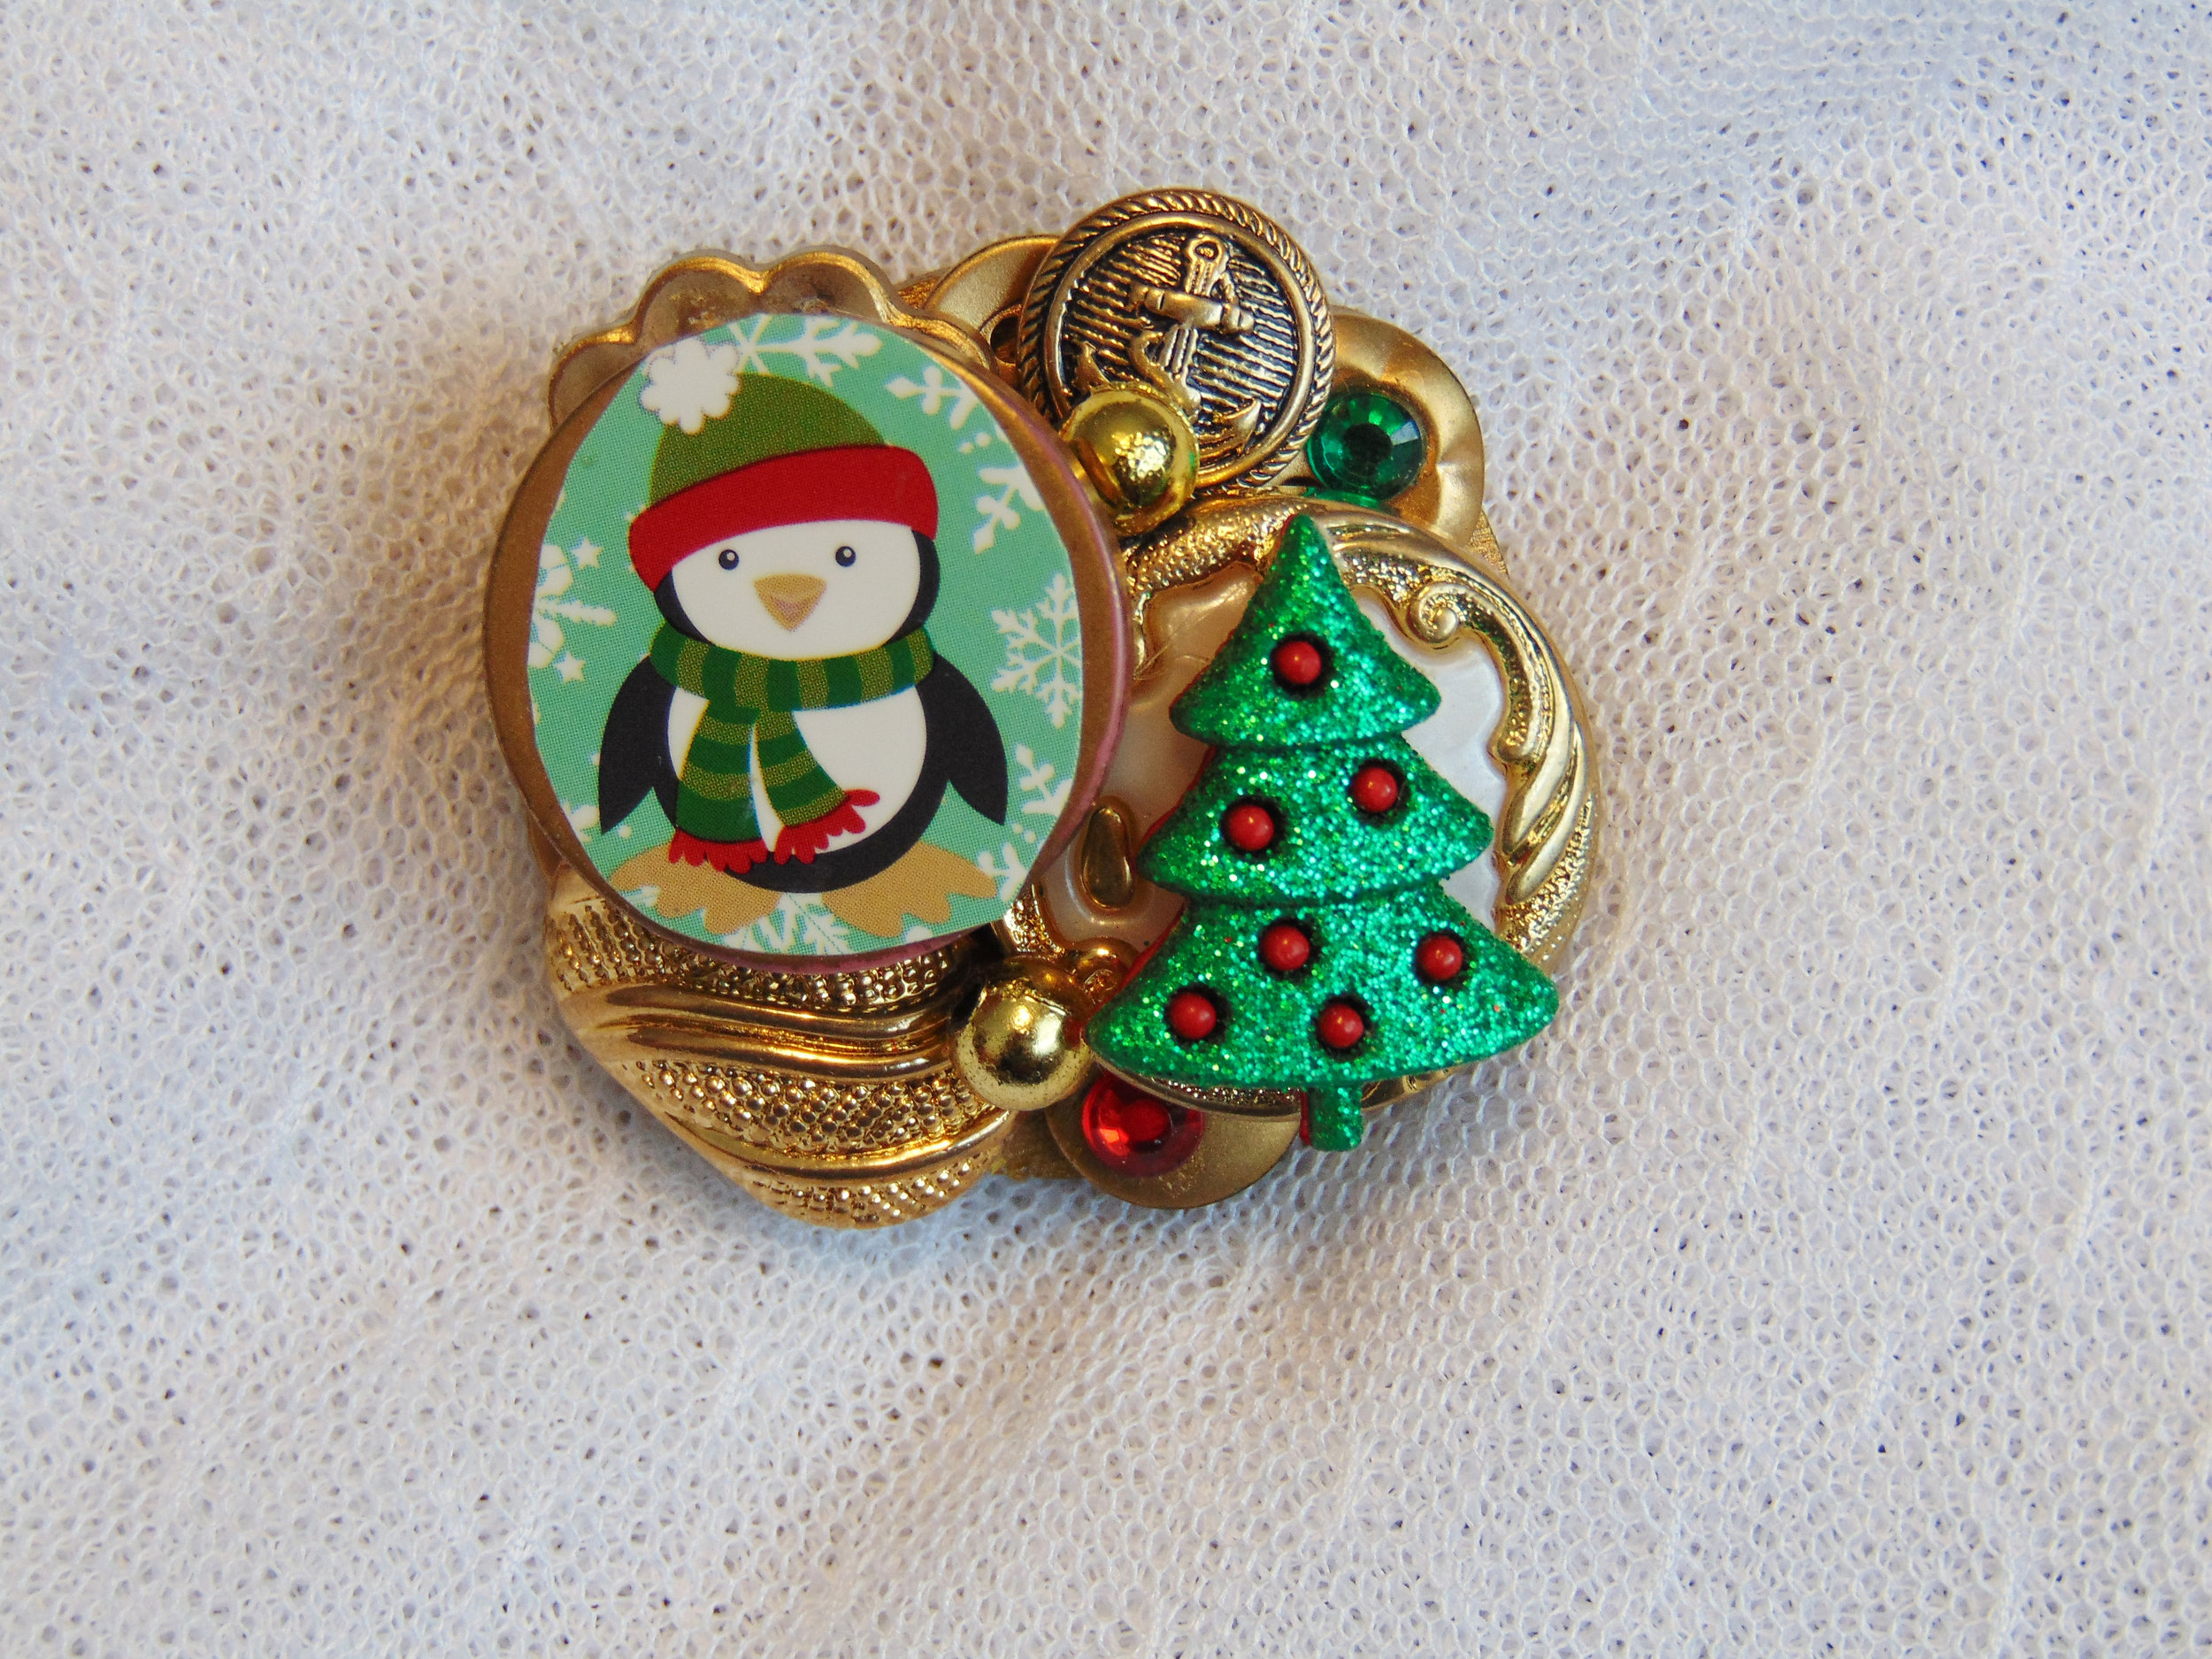 Handmade Christmas and holiday brooch by JMB Designs